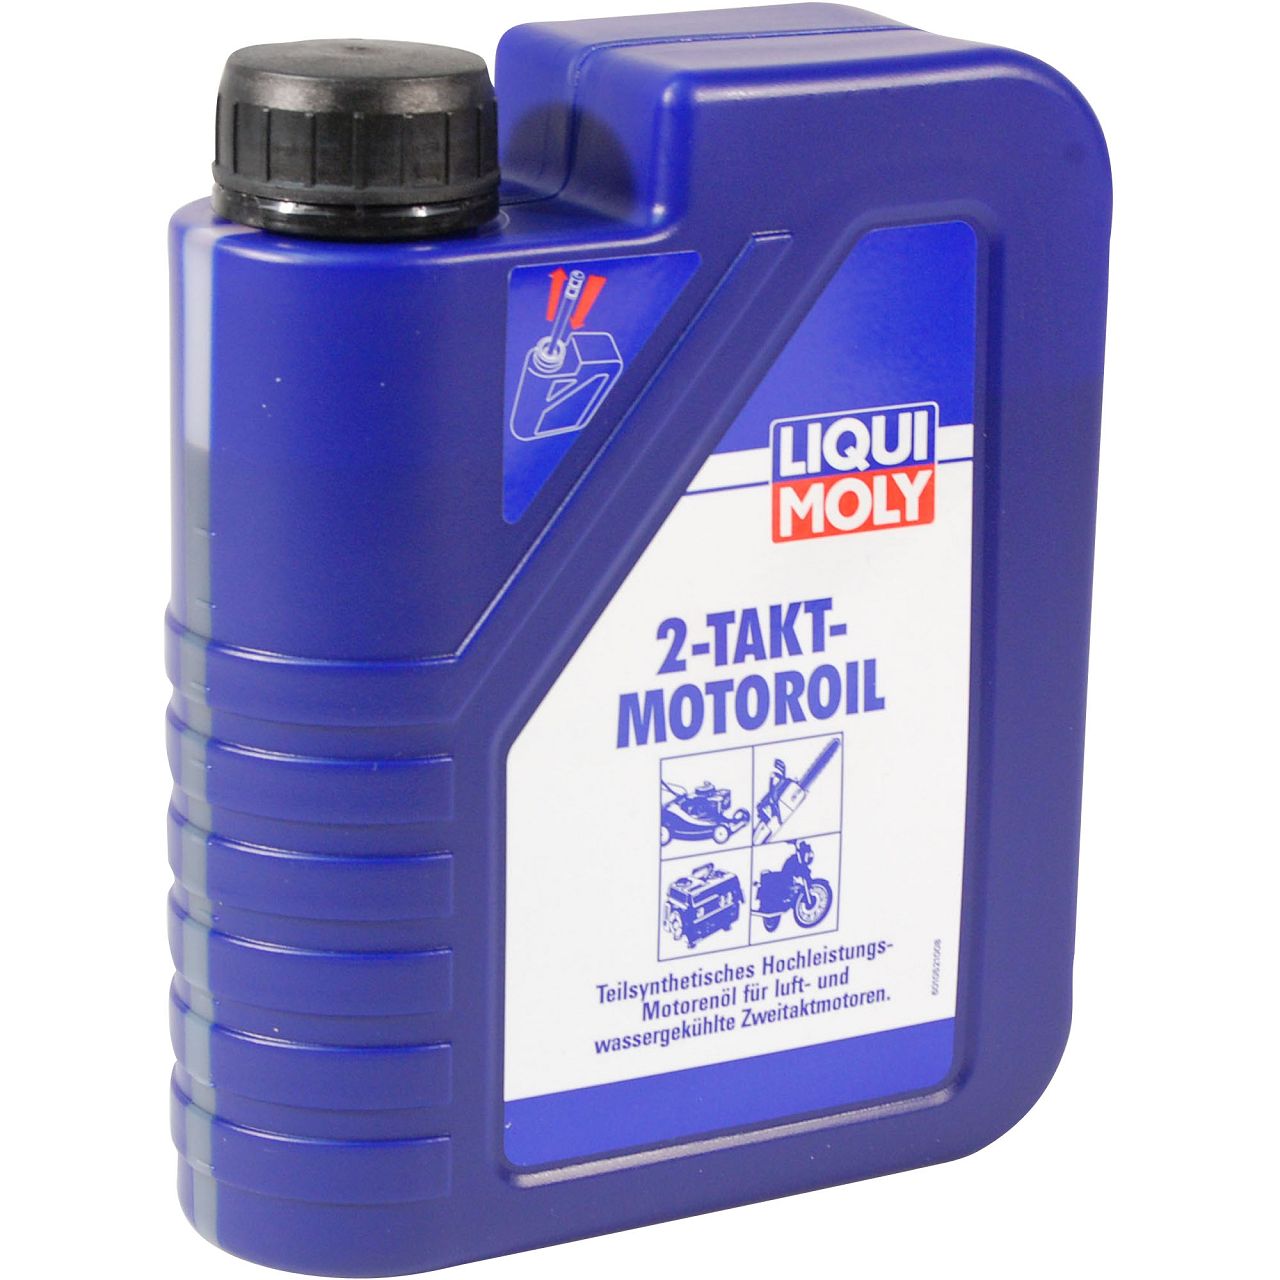 LIQUI MOLY Motoröl Öl 2-Takt-Motoroil selbstmischend 1L 1 Liter 1052